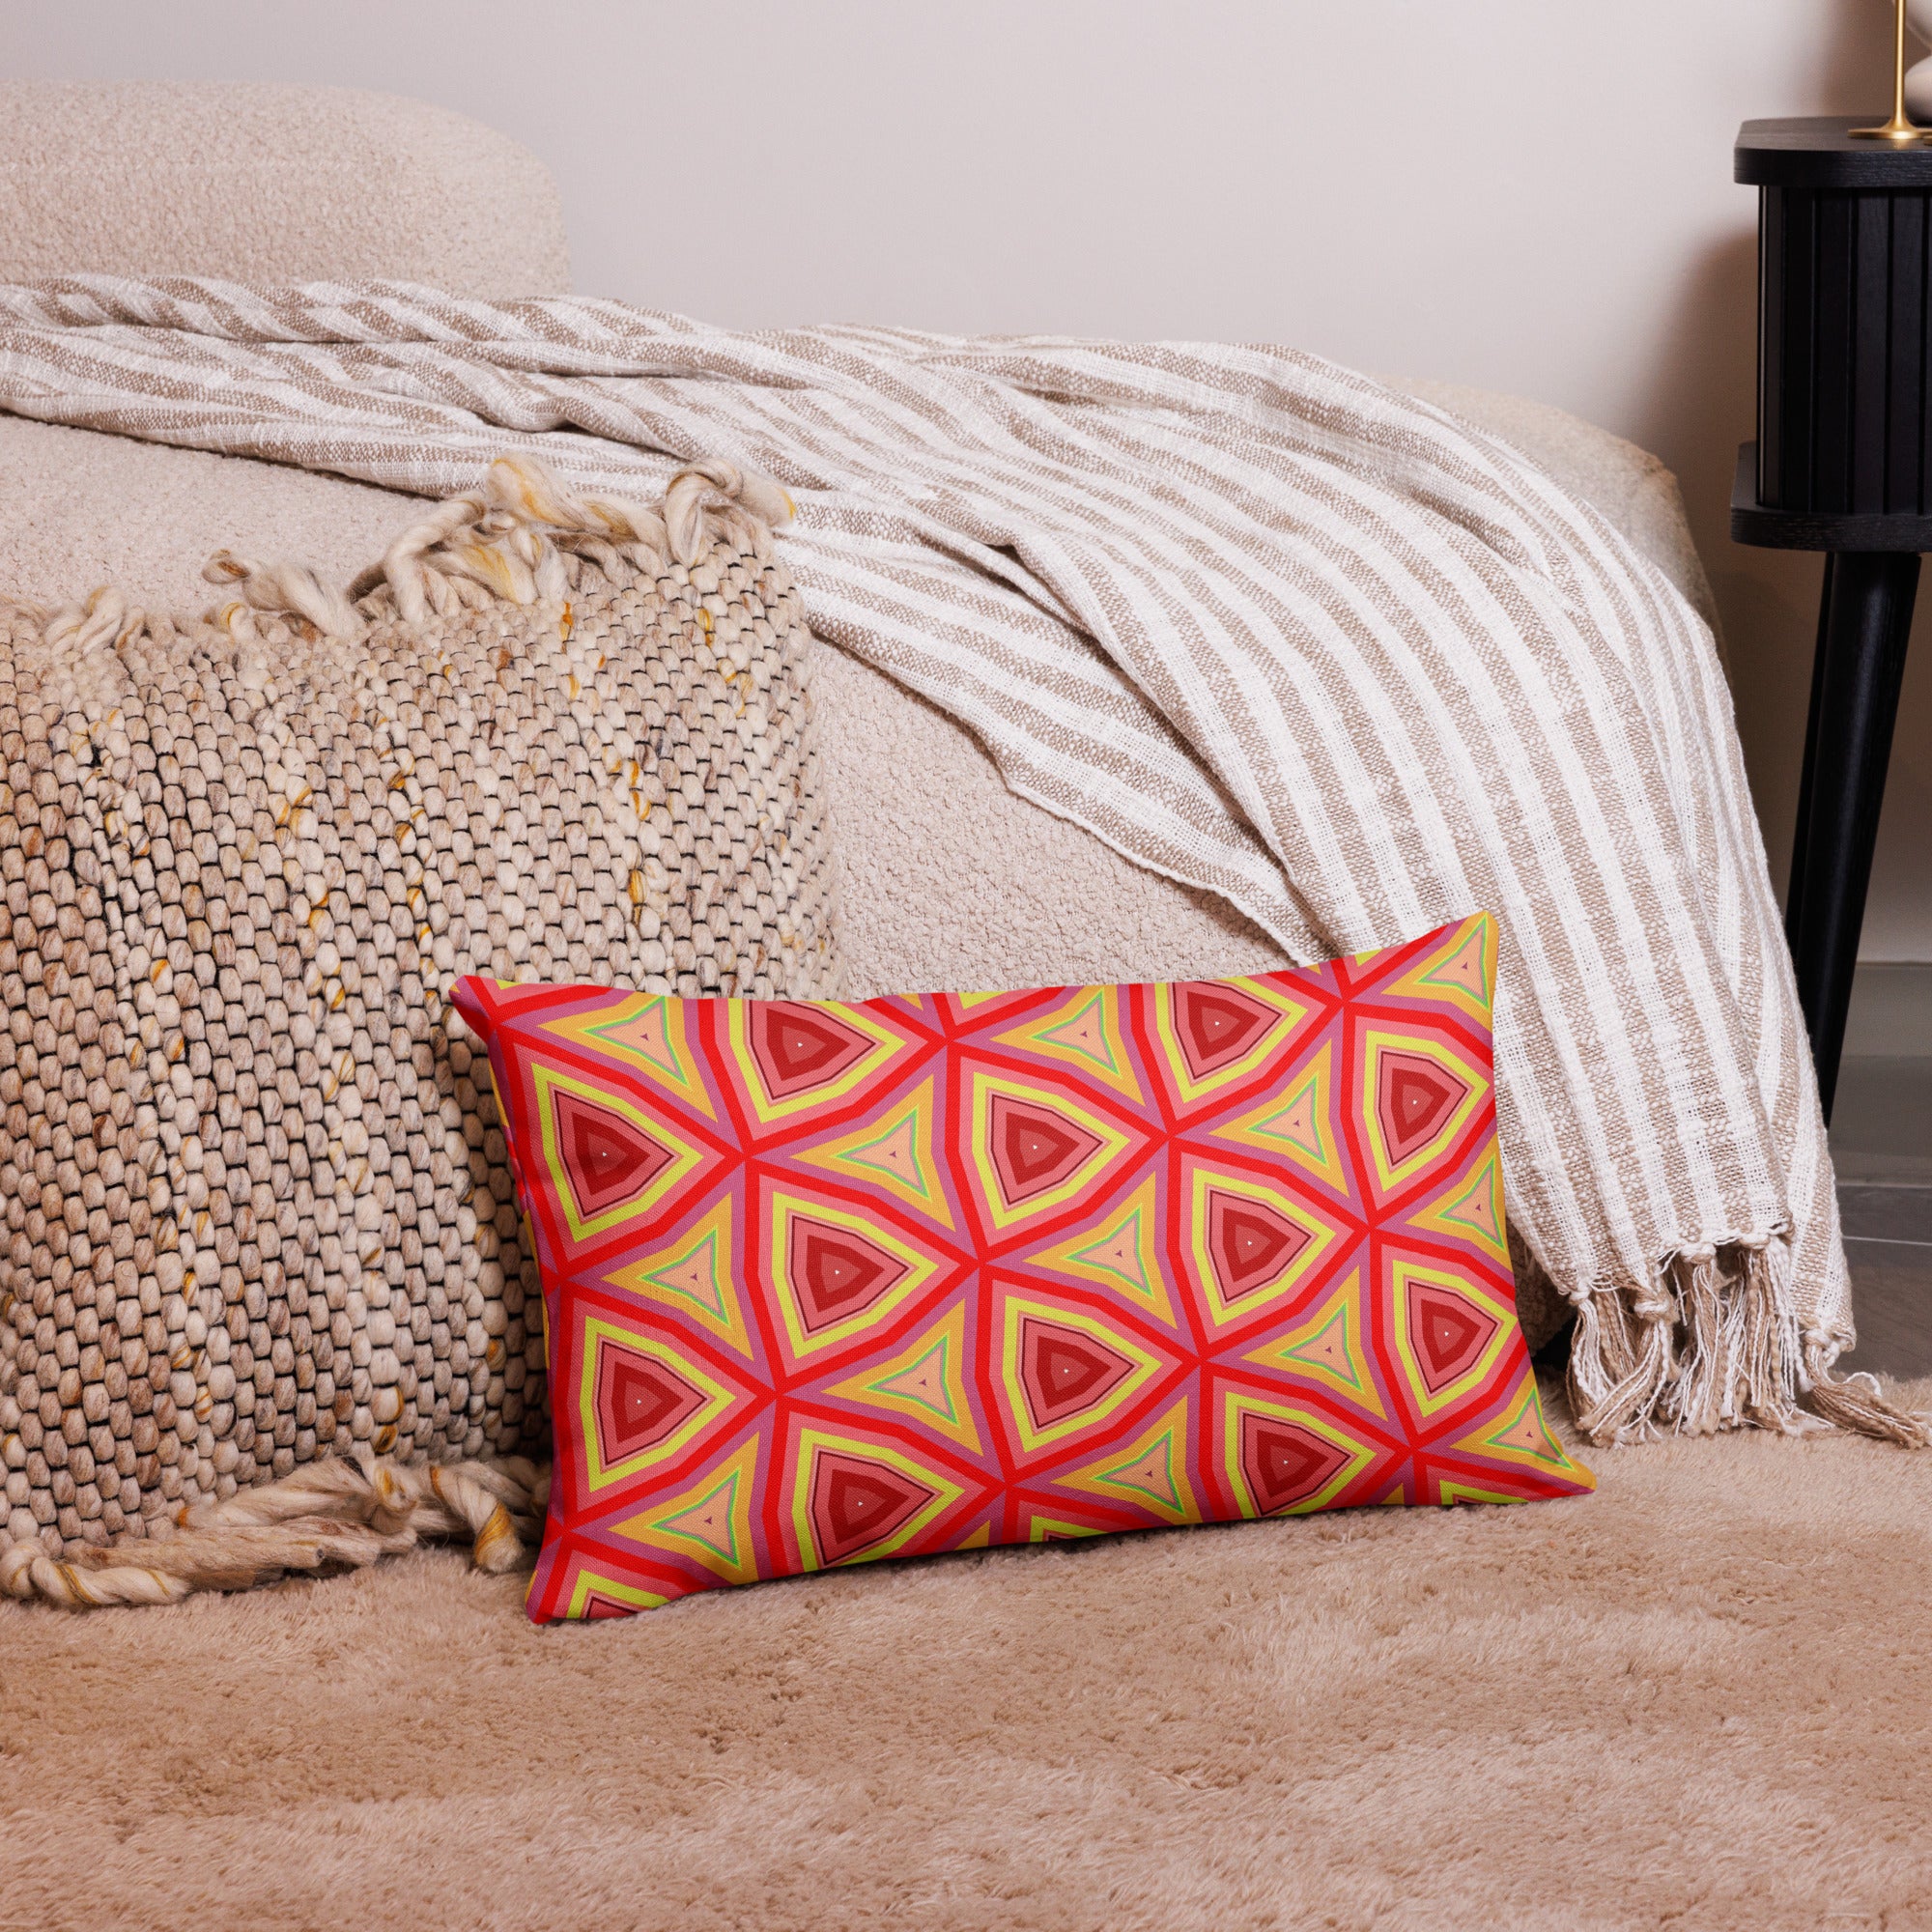 Luxurious Floral Fantasy pillow enhancing living room aesthetics.